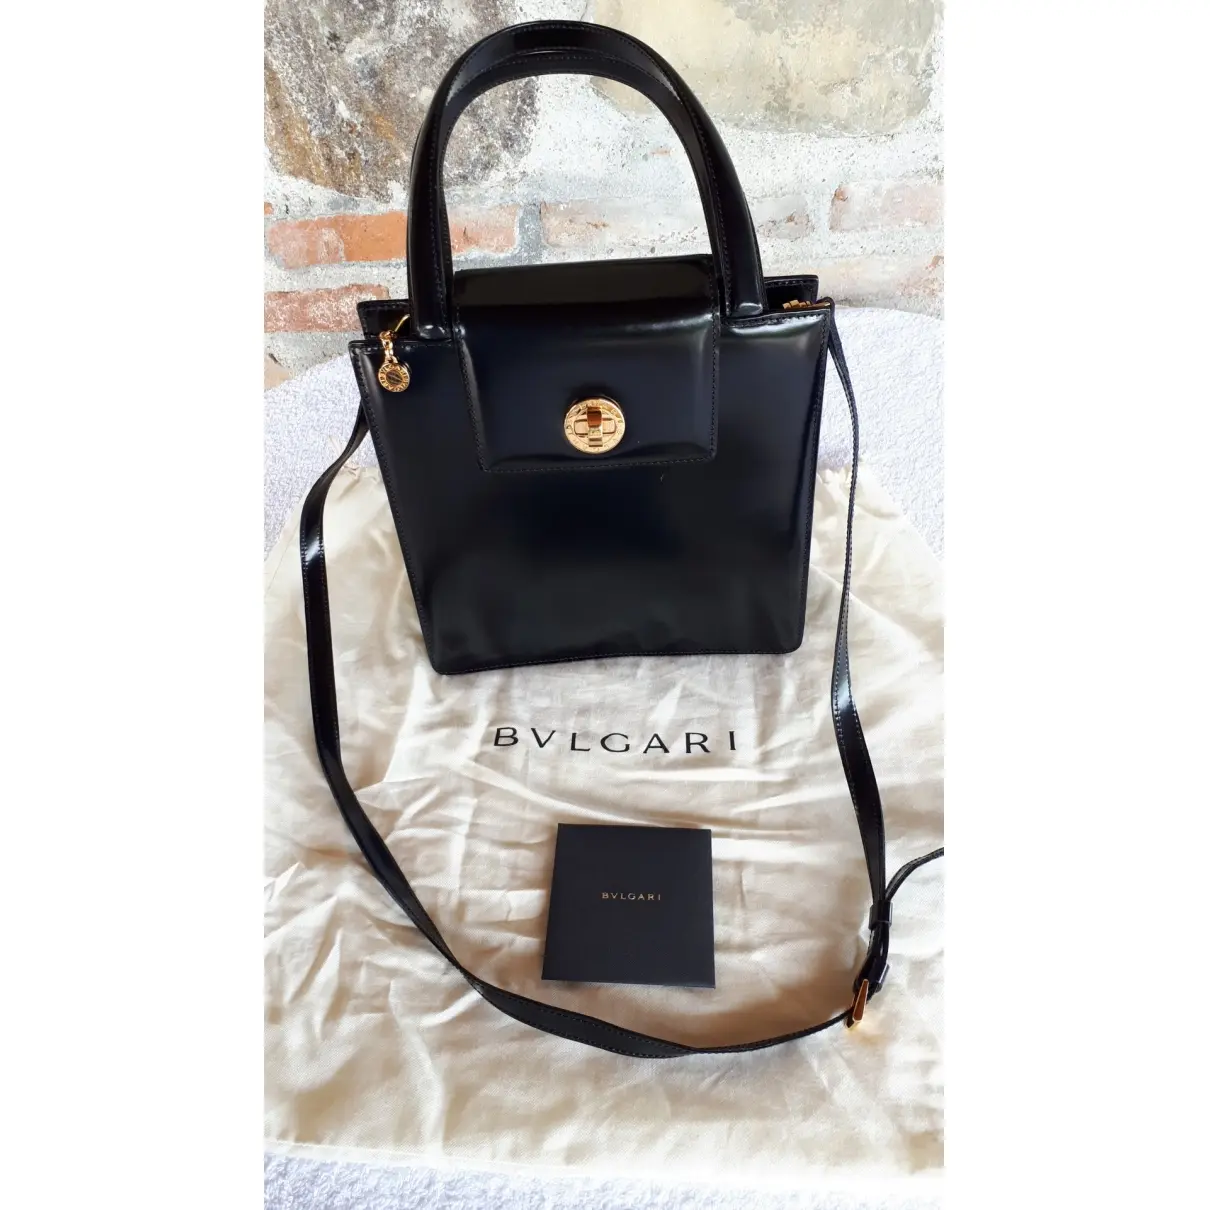 Buy Bvlgari Leather handbag online - Vintage